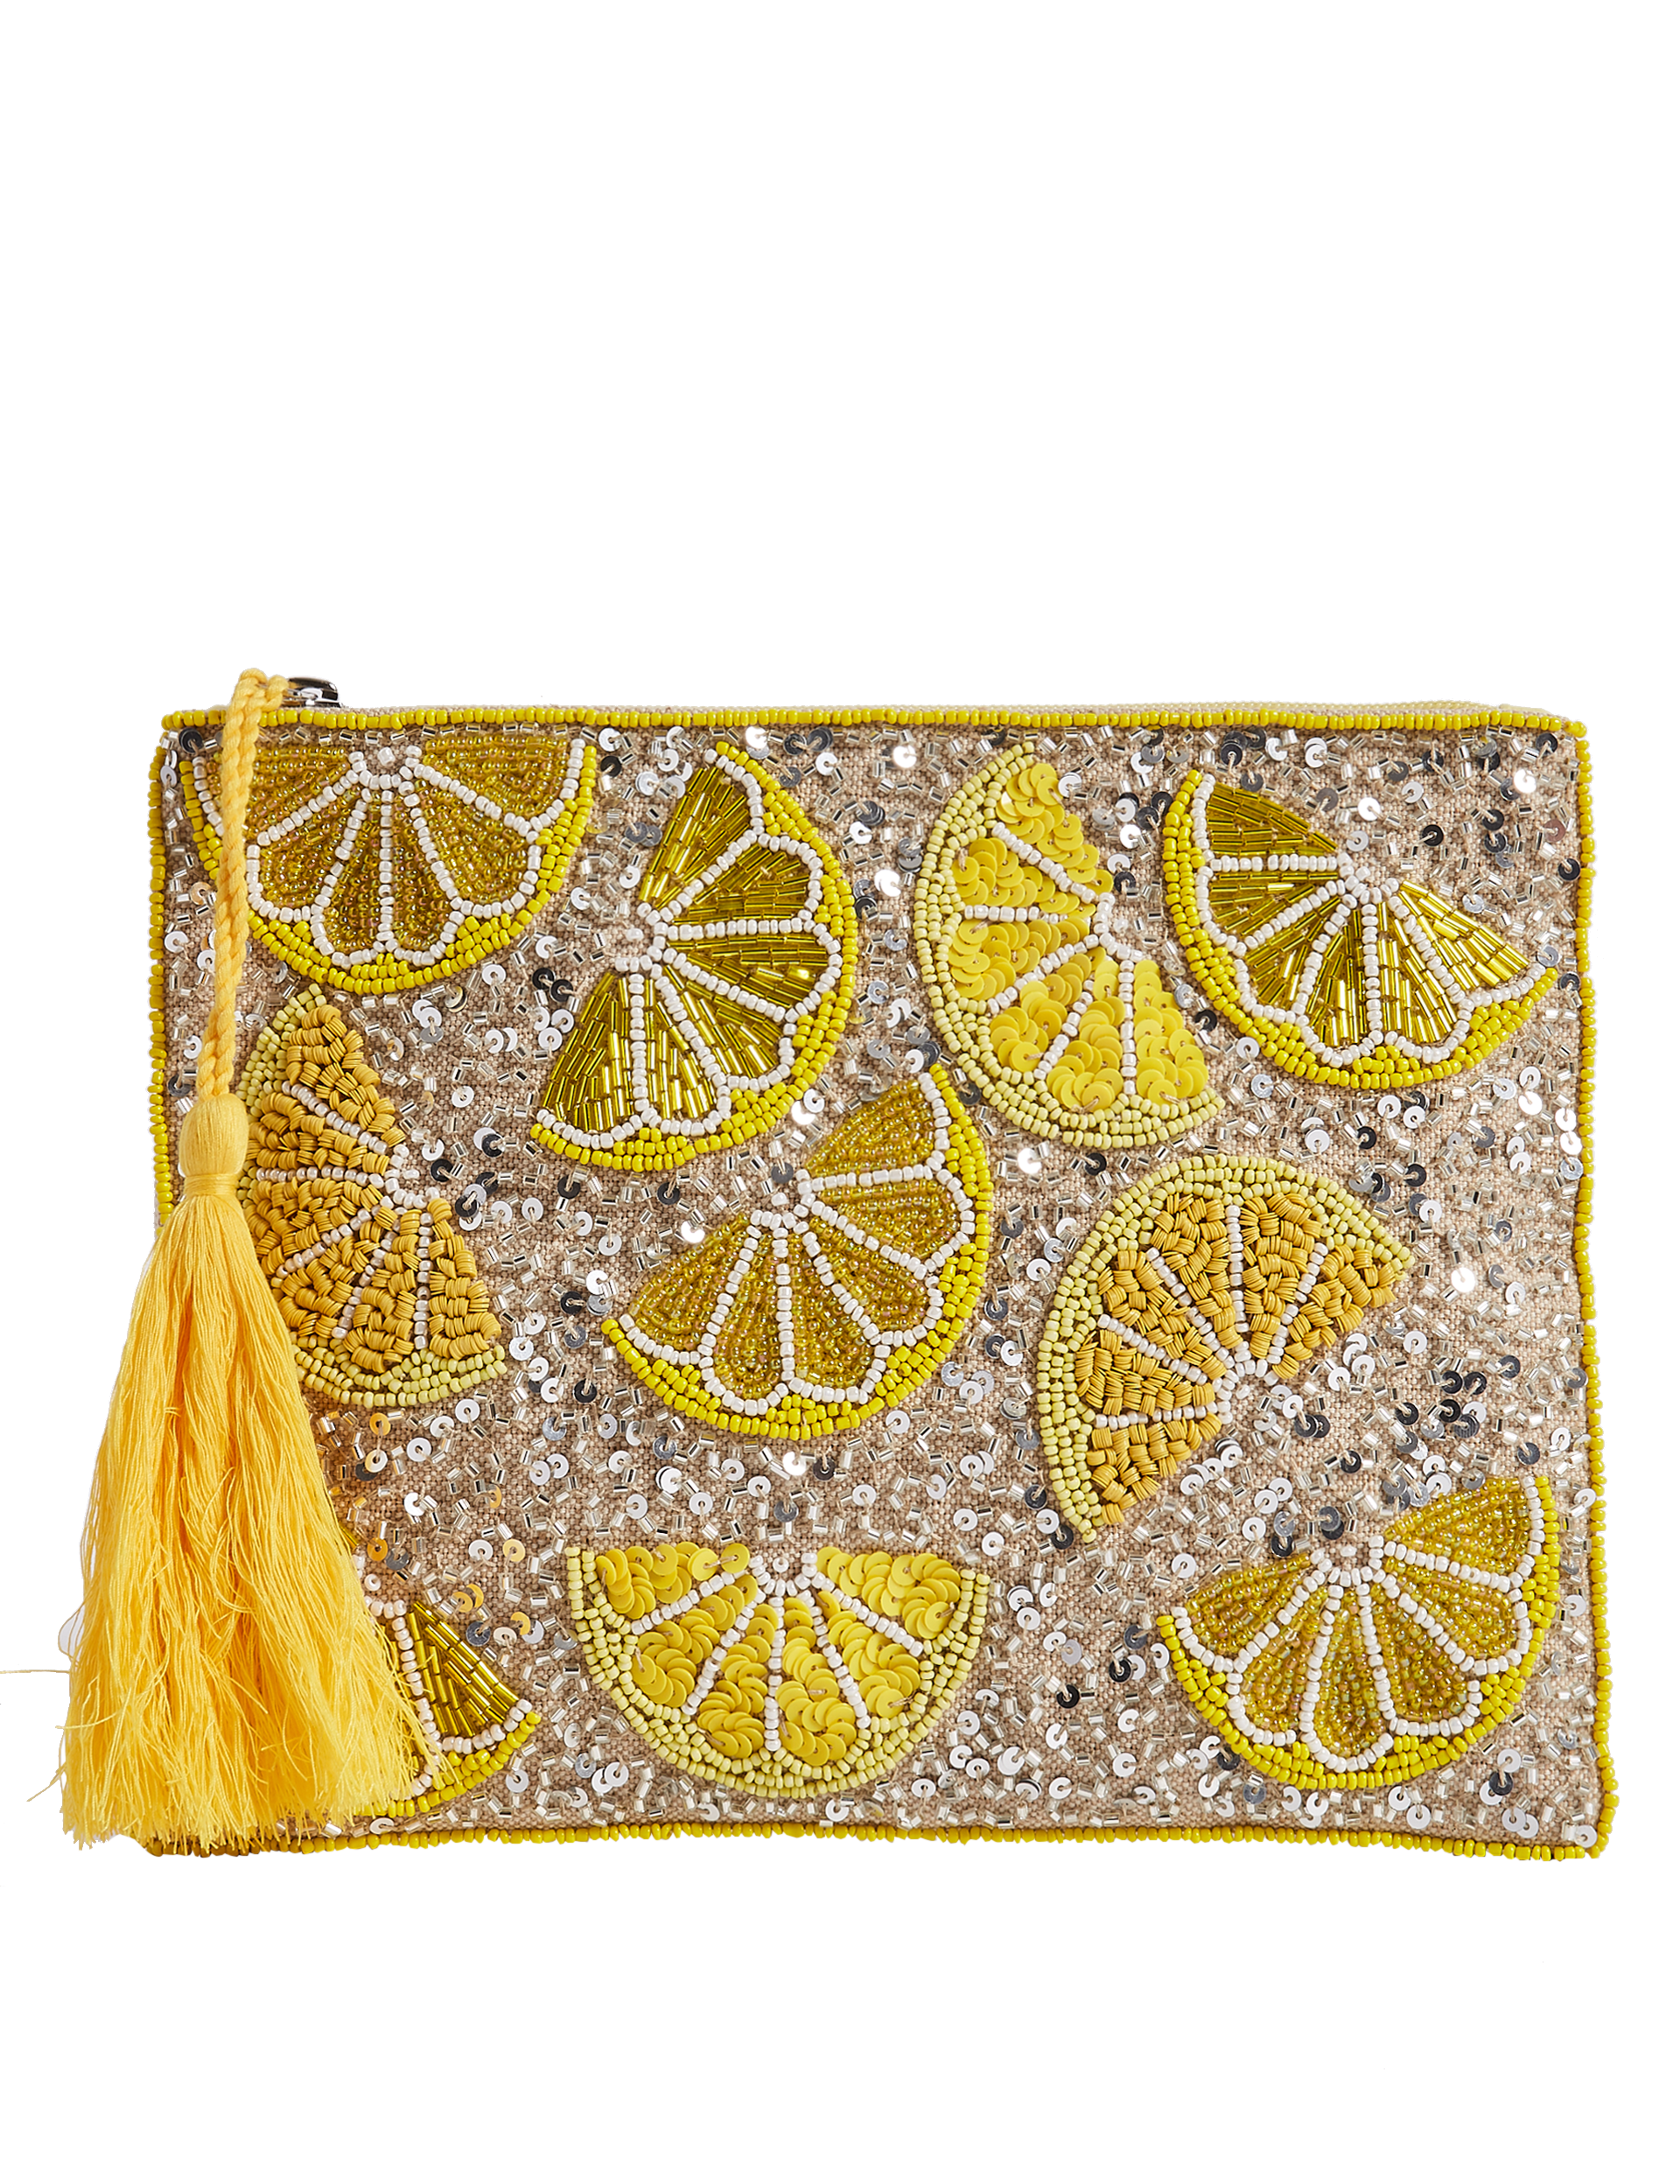 lemon clutch bag